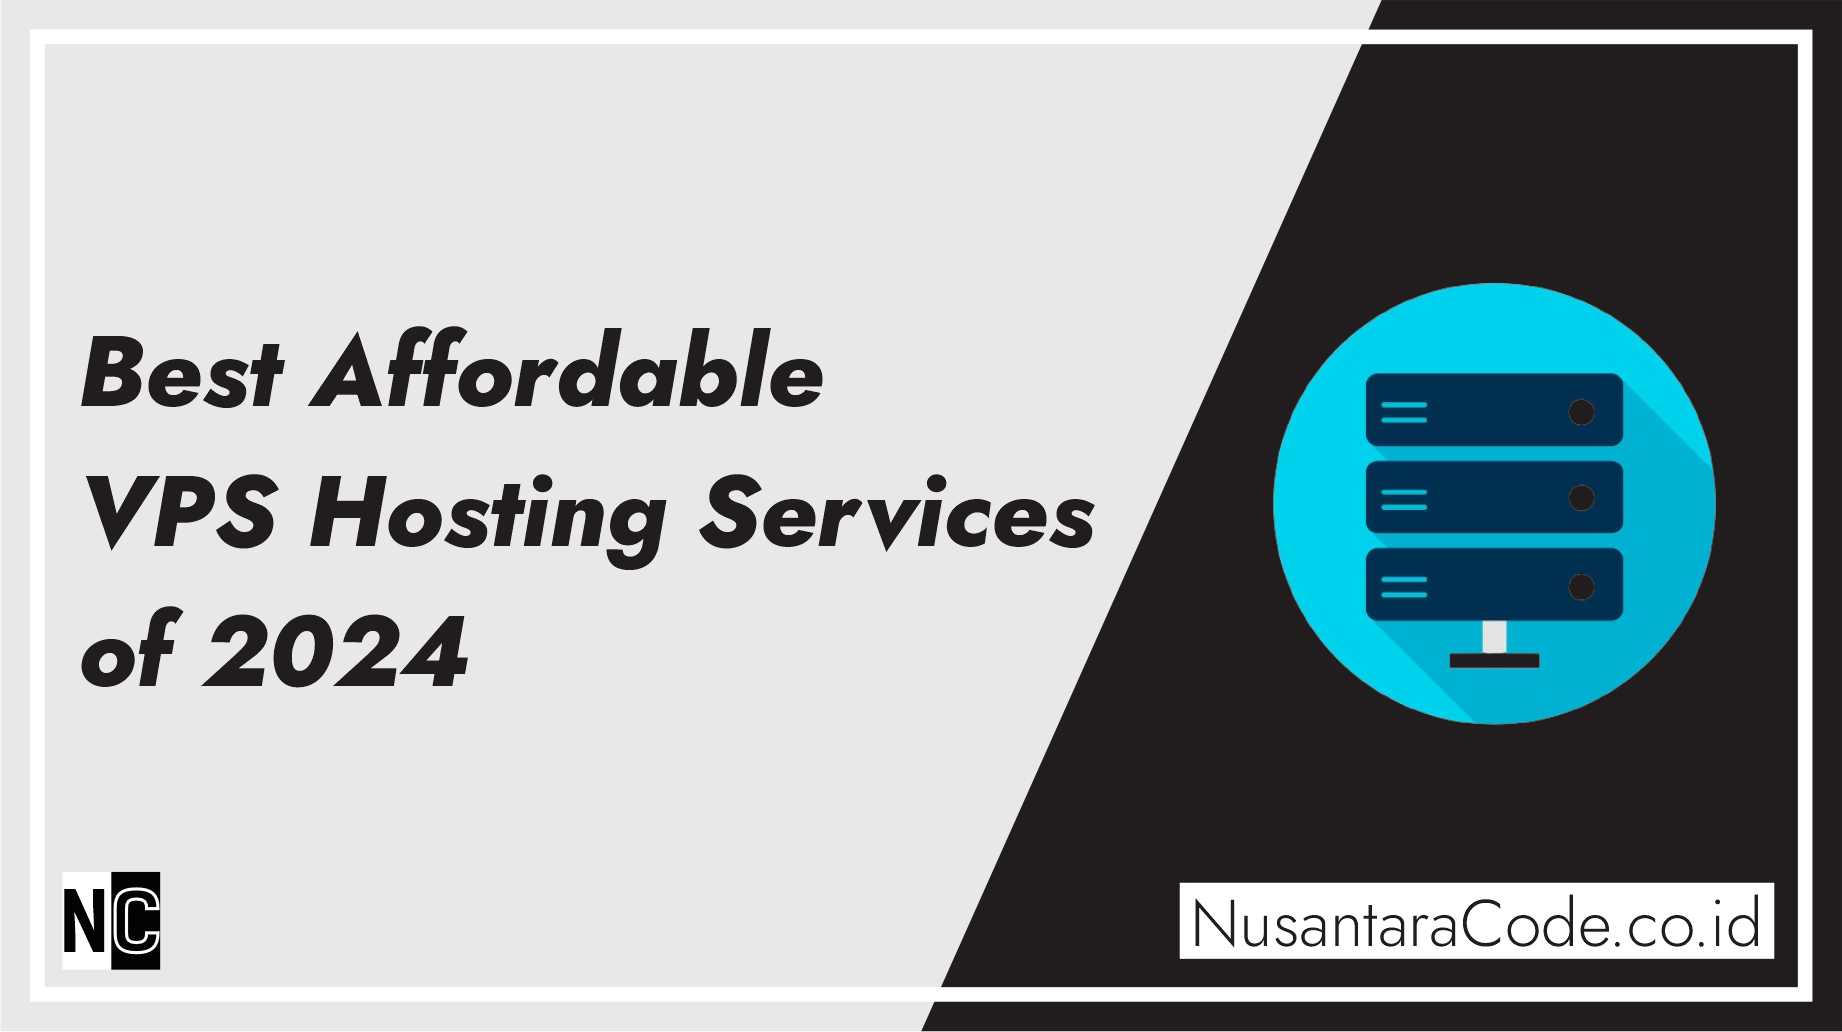 Best Affordable VPS Hosting Services of 2024